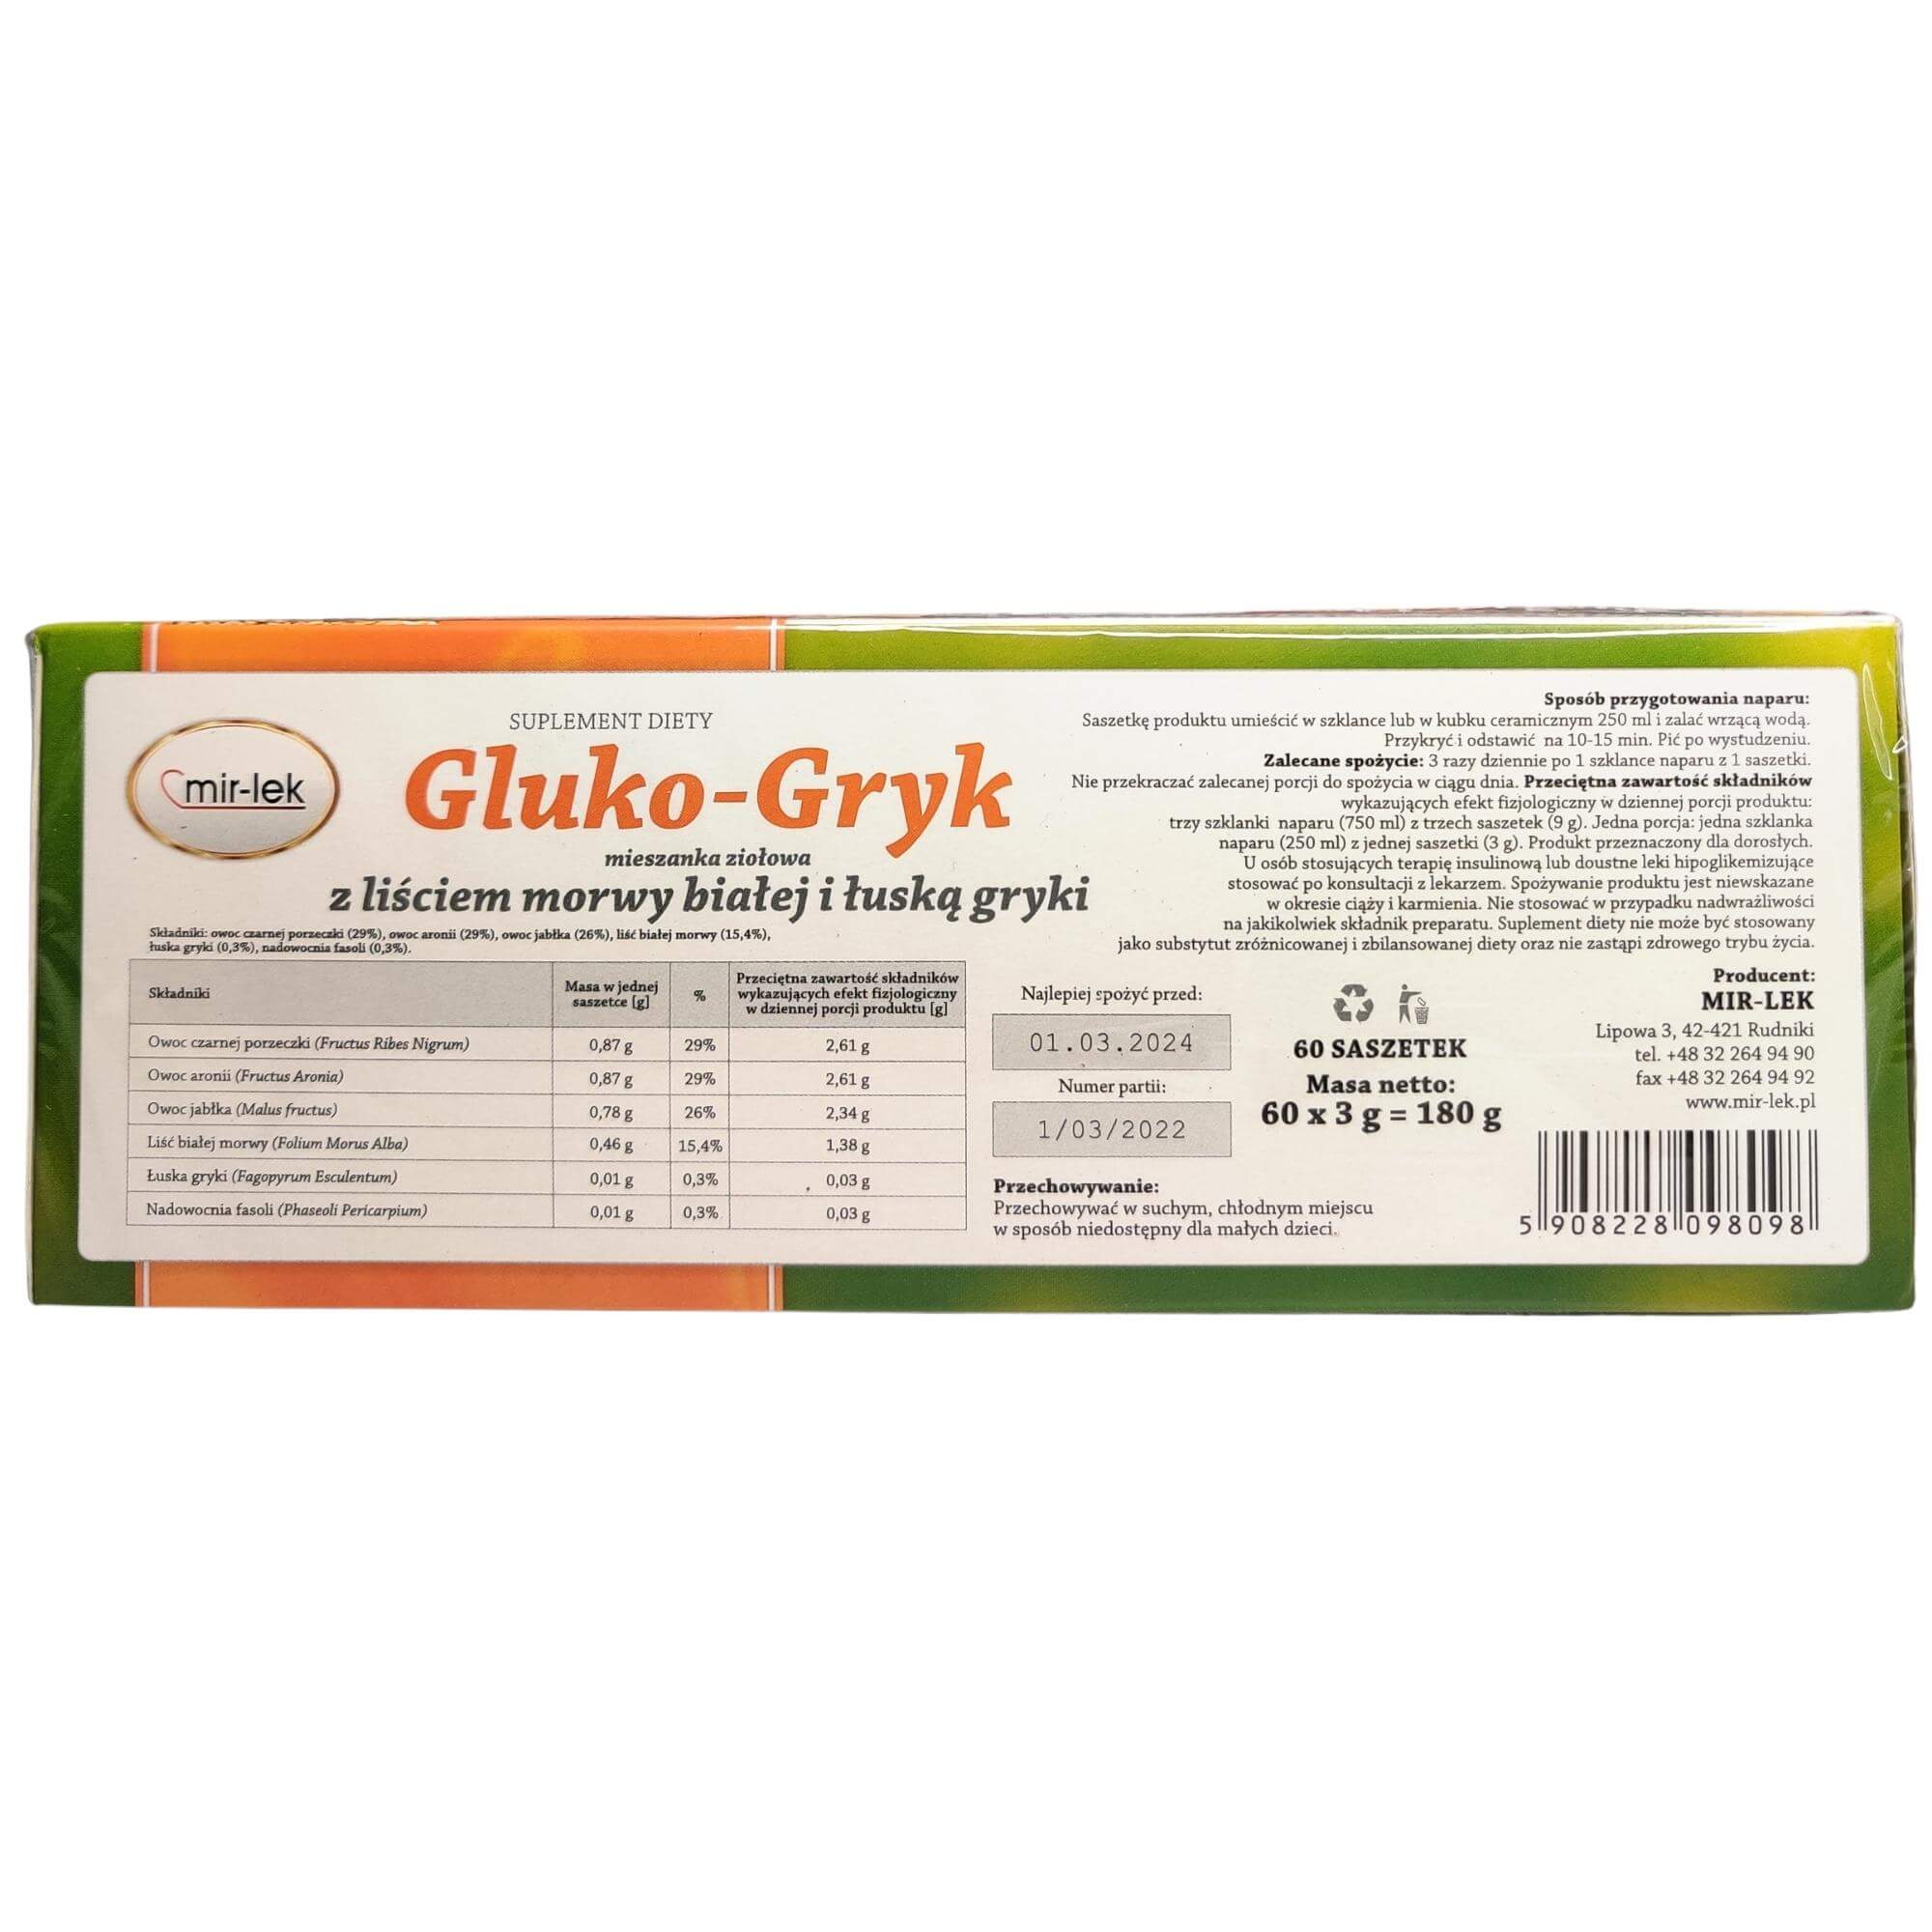 Herbata Gluko Gryk fix (60 x 3 g) 180 g - Mir-lek